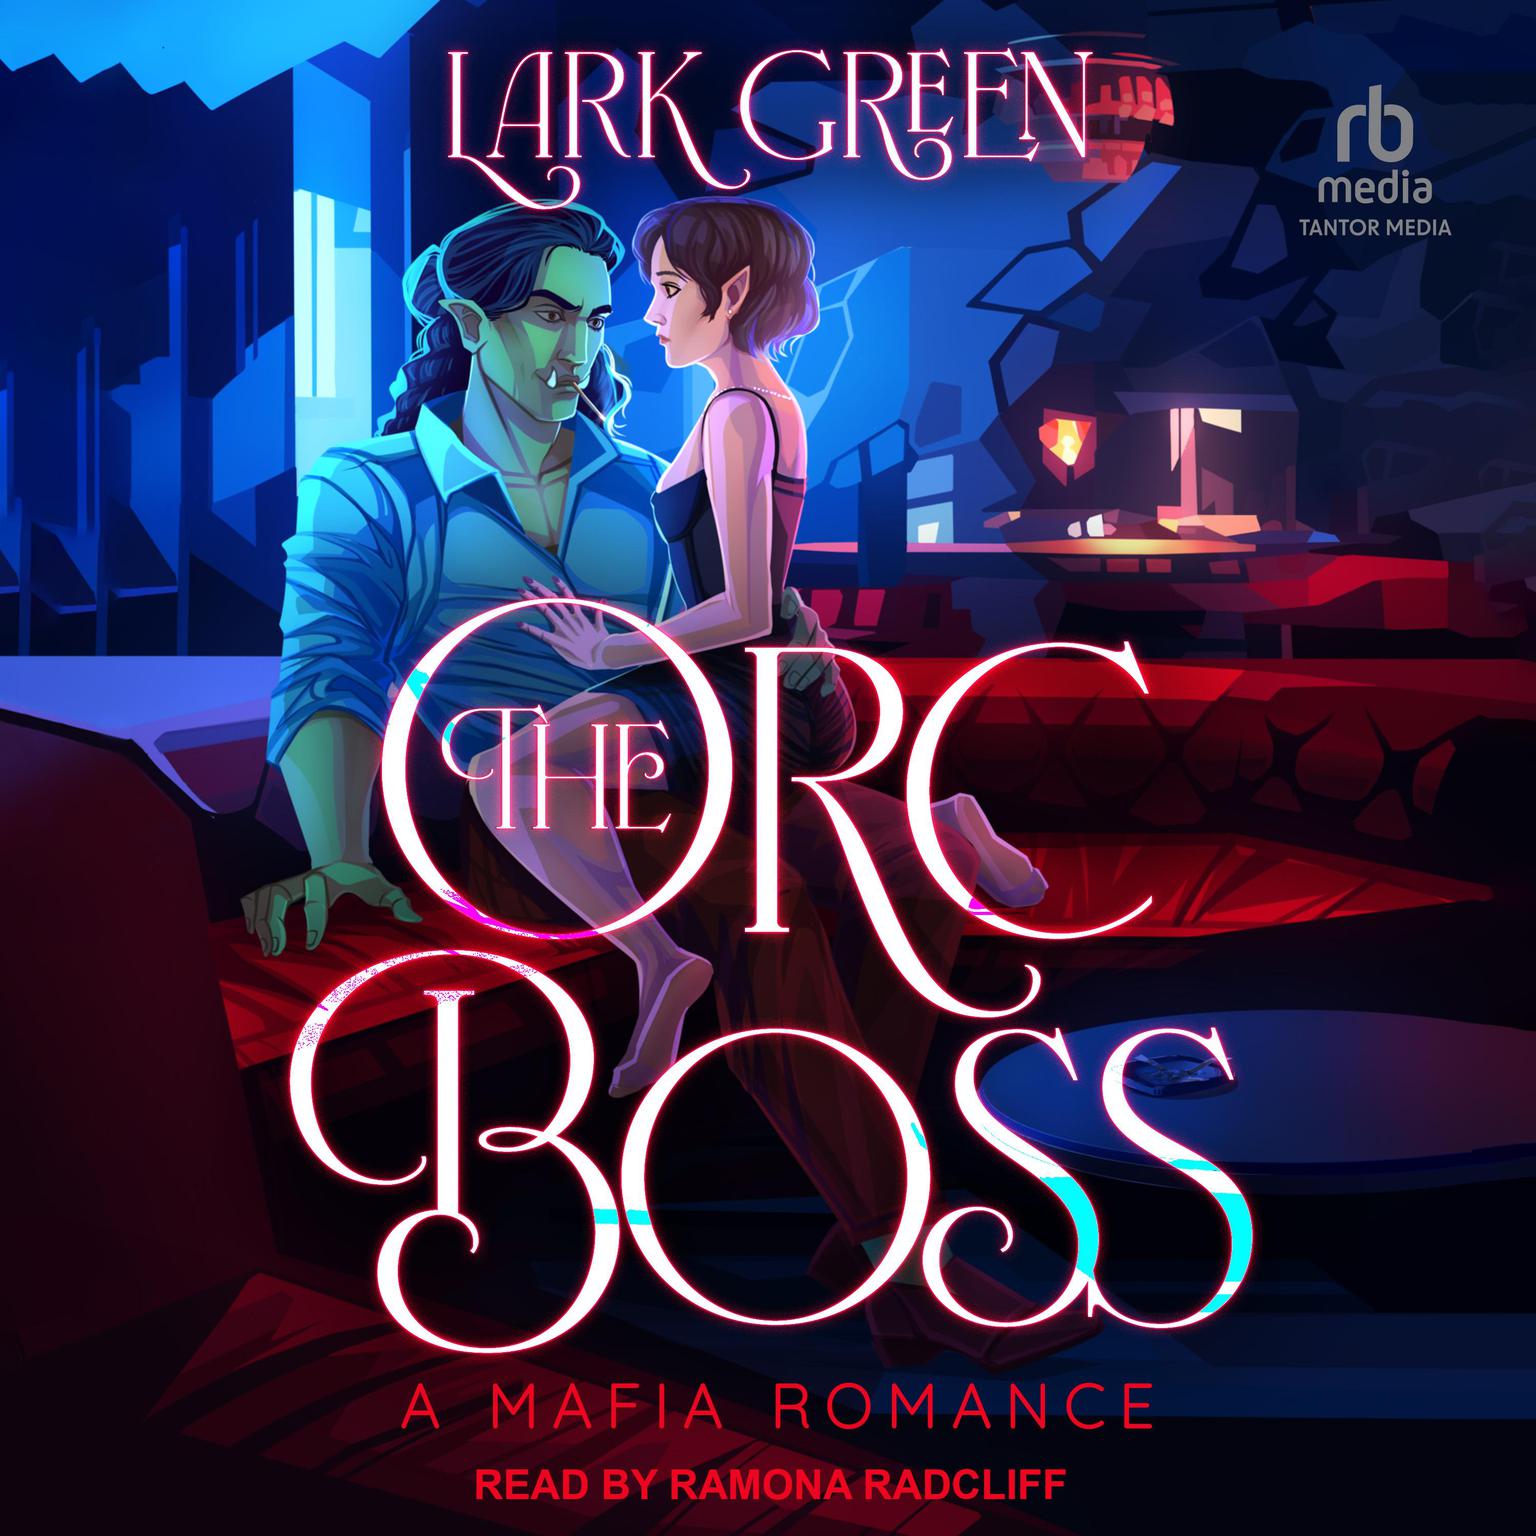 The Orc Boss: A Mafia Romance Audiobook, by Lark Green